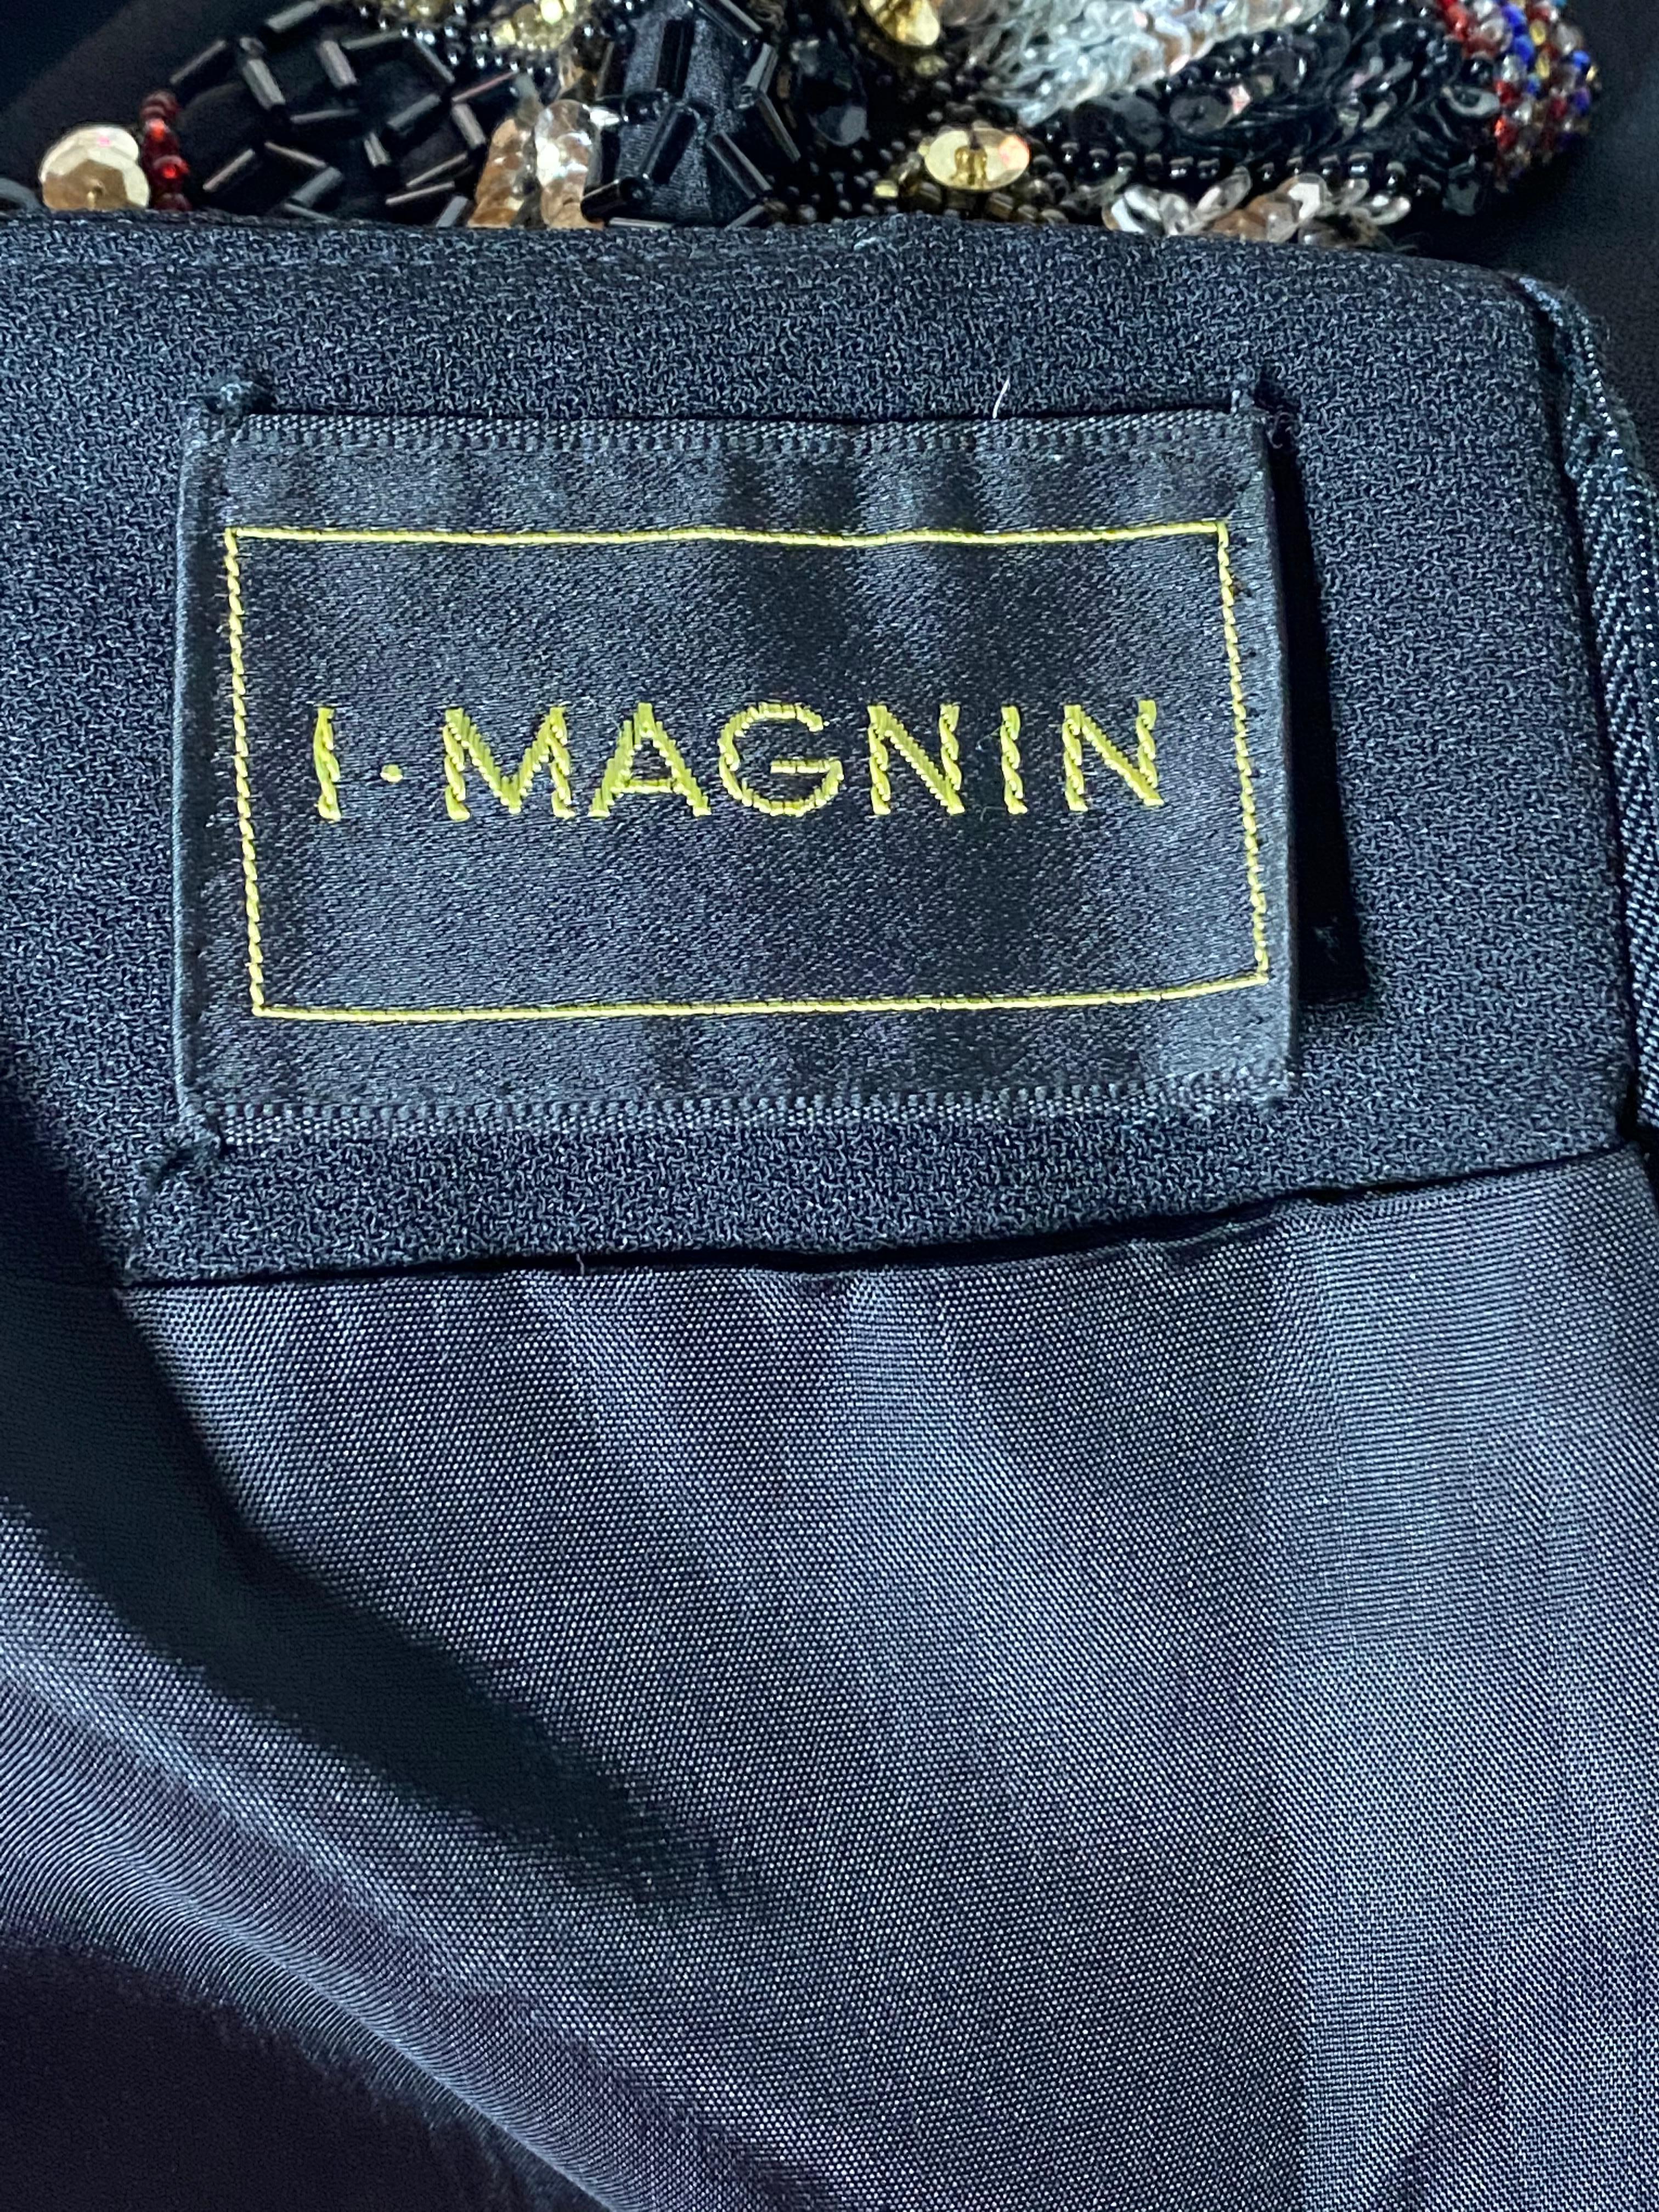 I. Magnin - Robe courte de soirée noire en vente 1